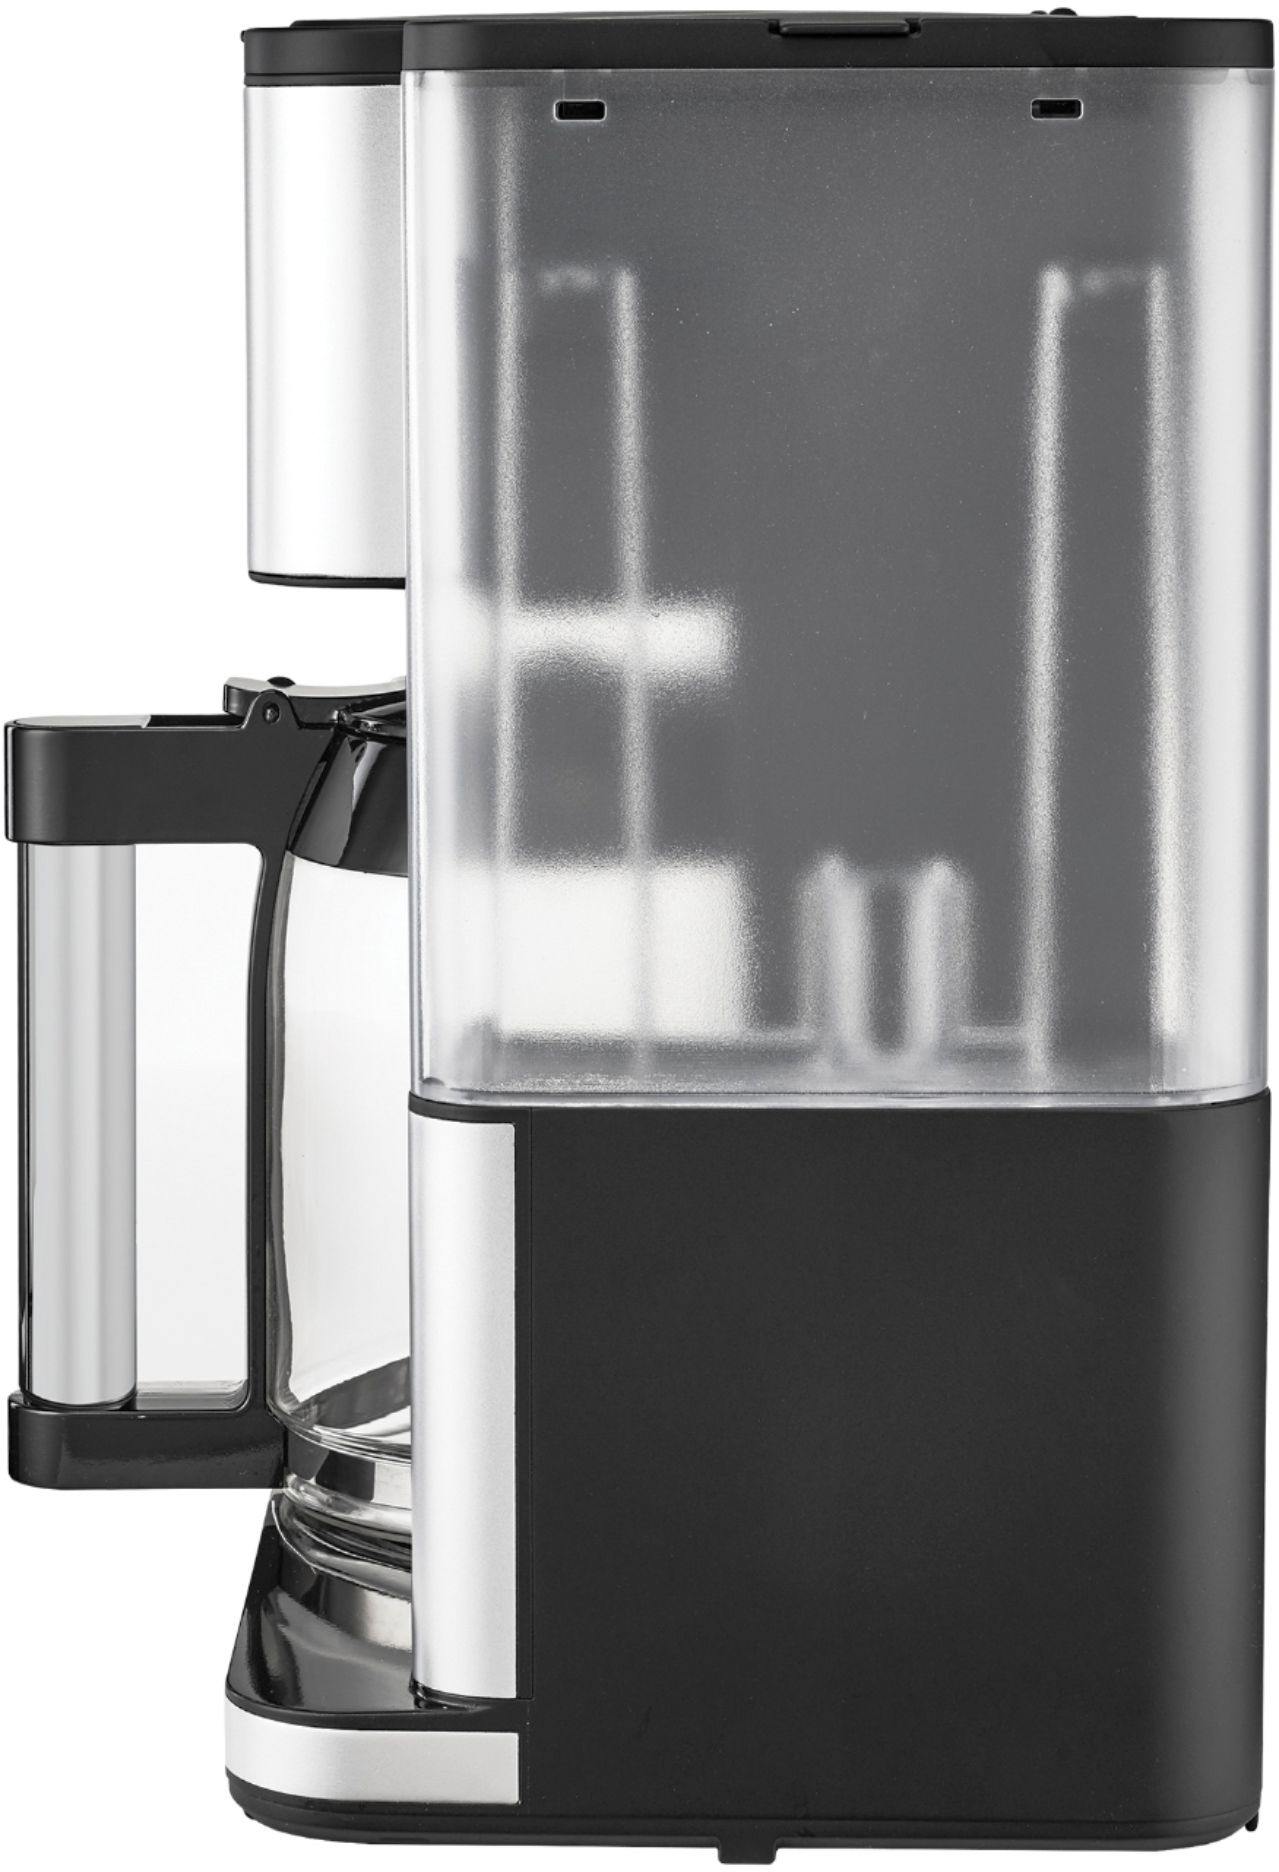 Best Buy: Bella Pro Series 14-Cup Coffee Maker Copper 90095